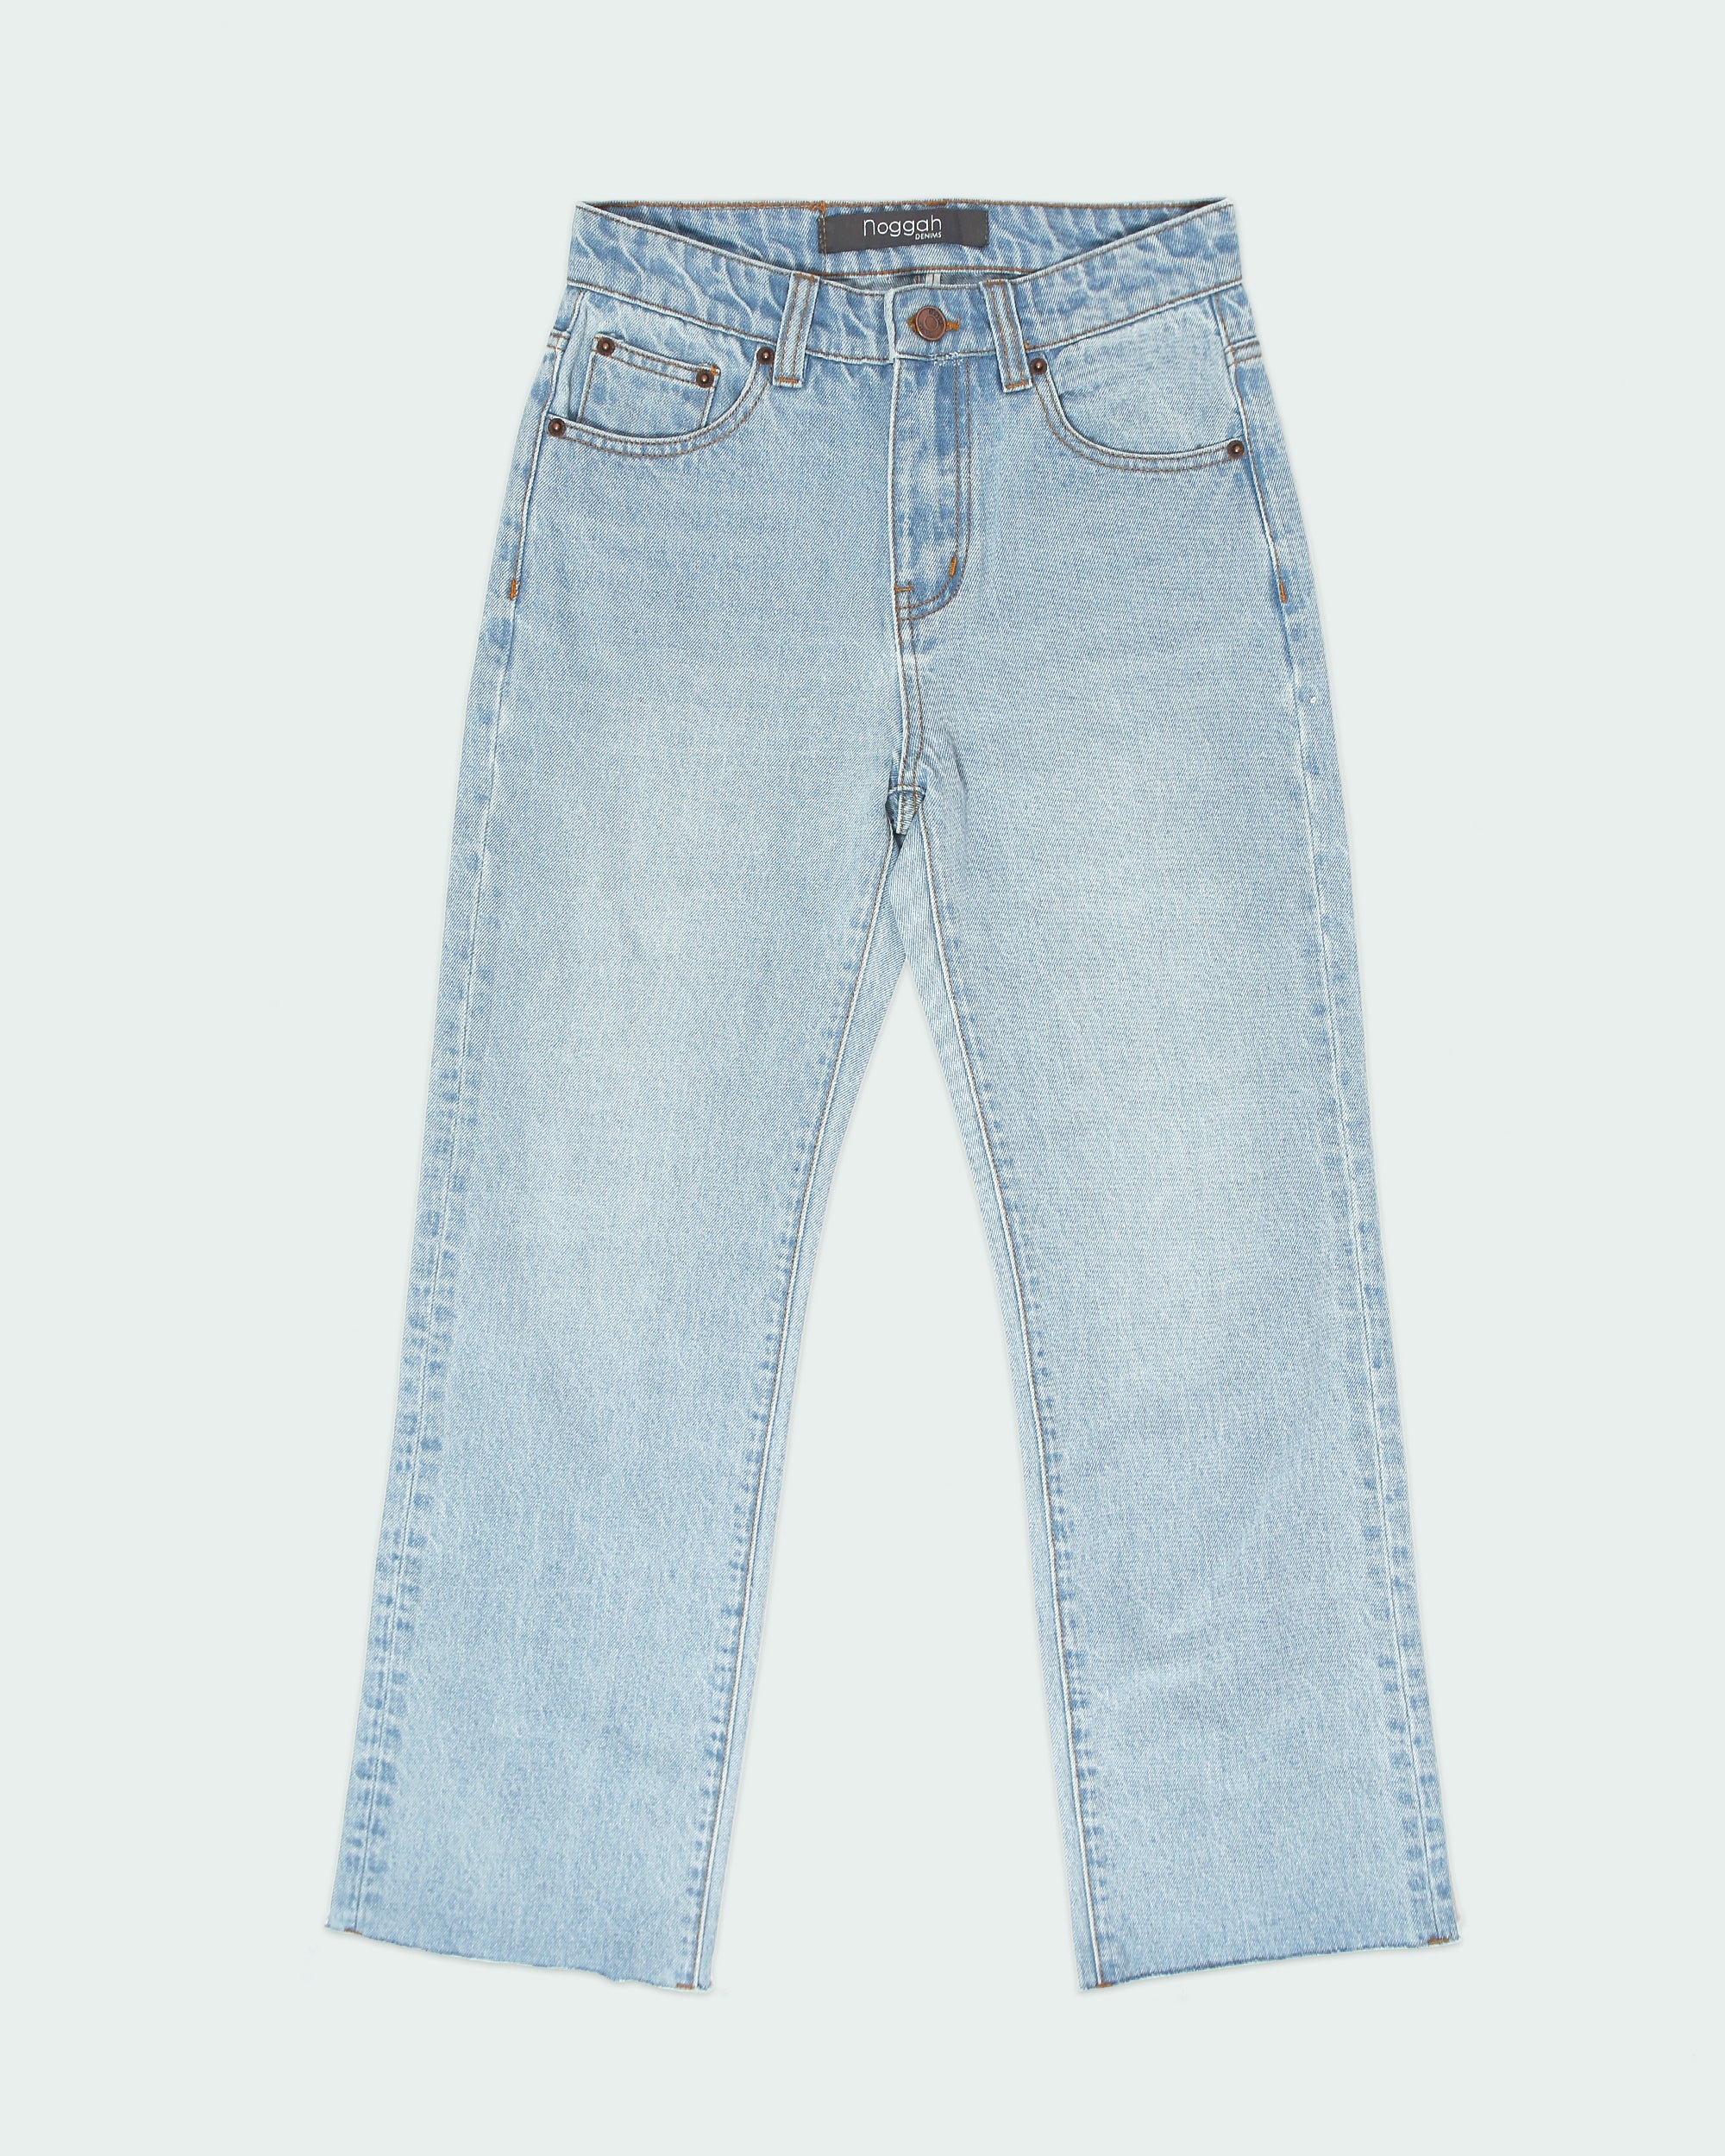 Size 3 5 7 15 Risen Jeans Light Wash High Rise Wide Leg Flare Denim